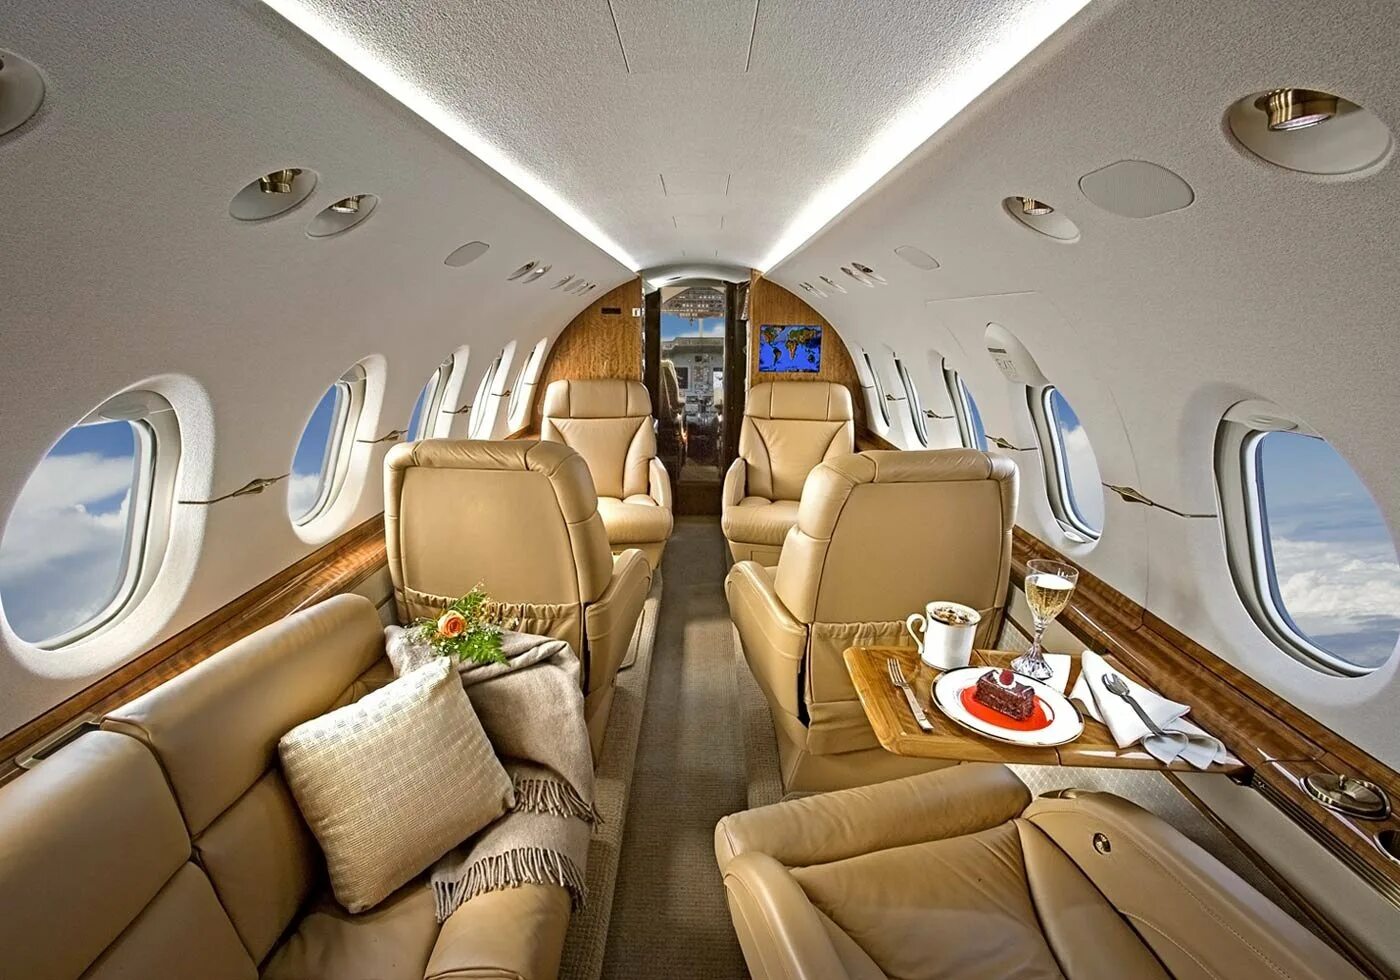 Bombardier Global 7000. Luxury private Jet Interior 2021 | Gulfstream g700. Самолёт Bombardier Global 7000 салон. Прайват Джет.